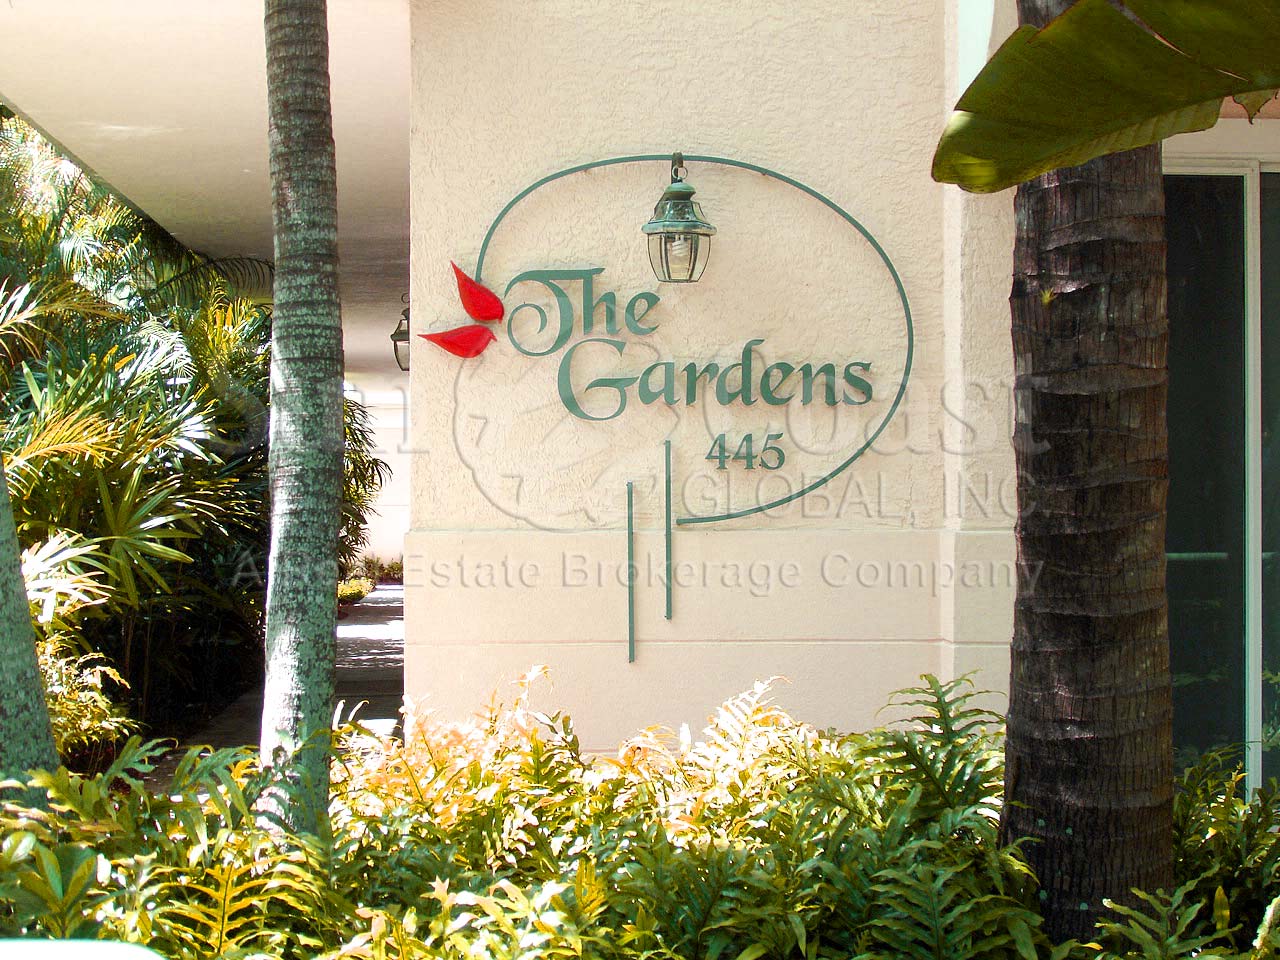 Gardens Signage